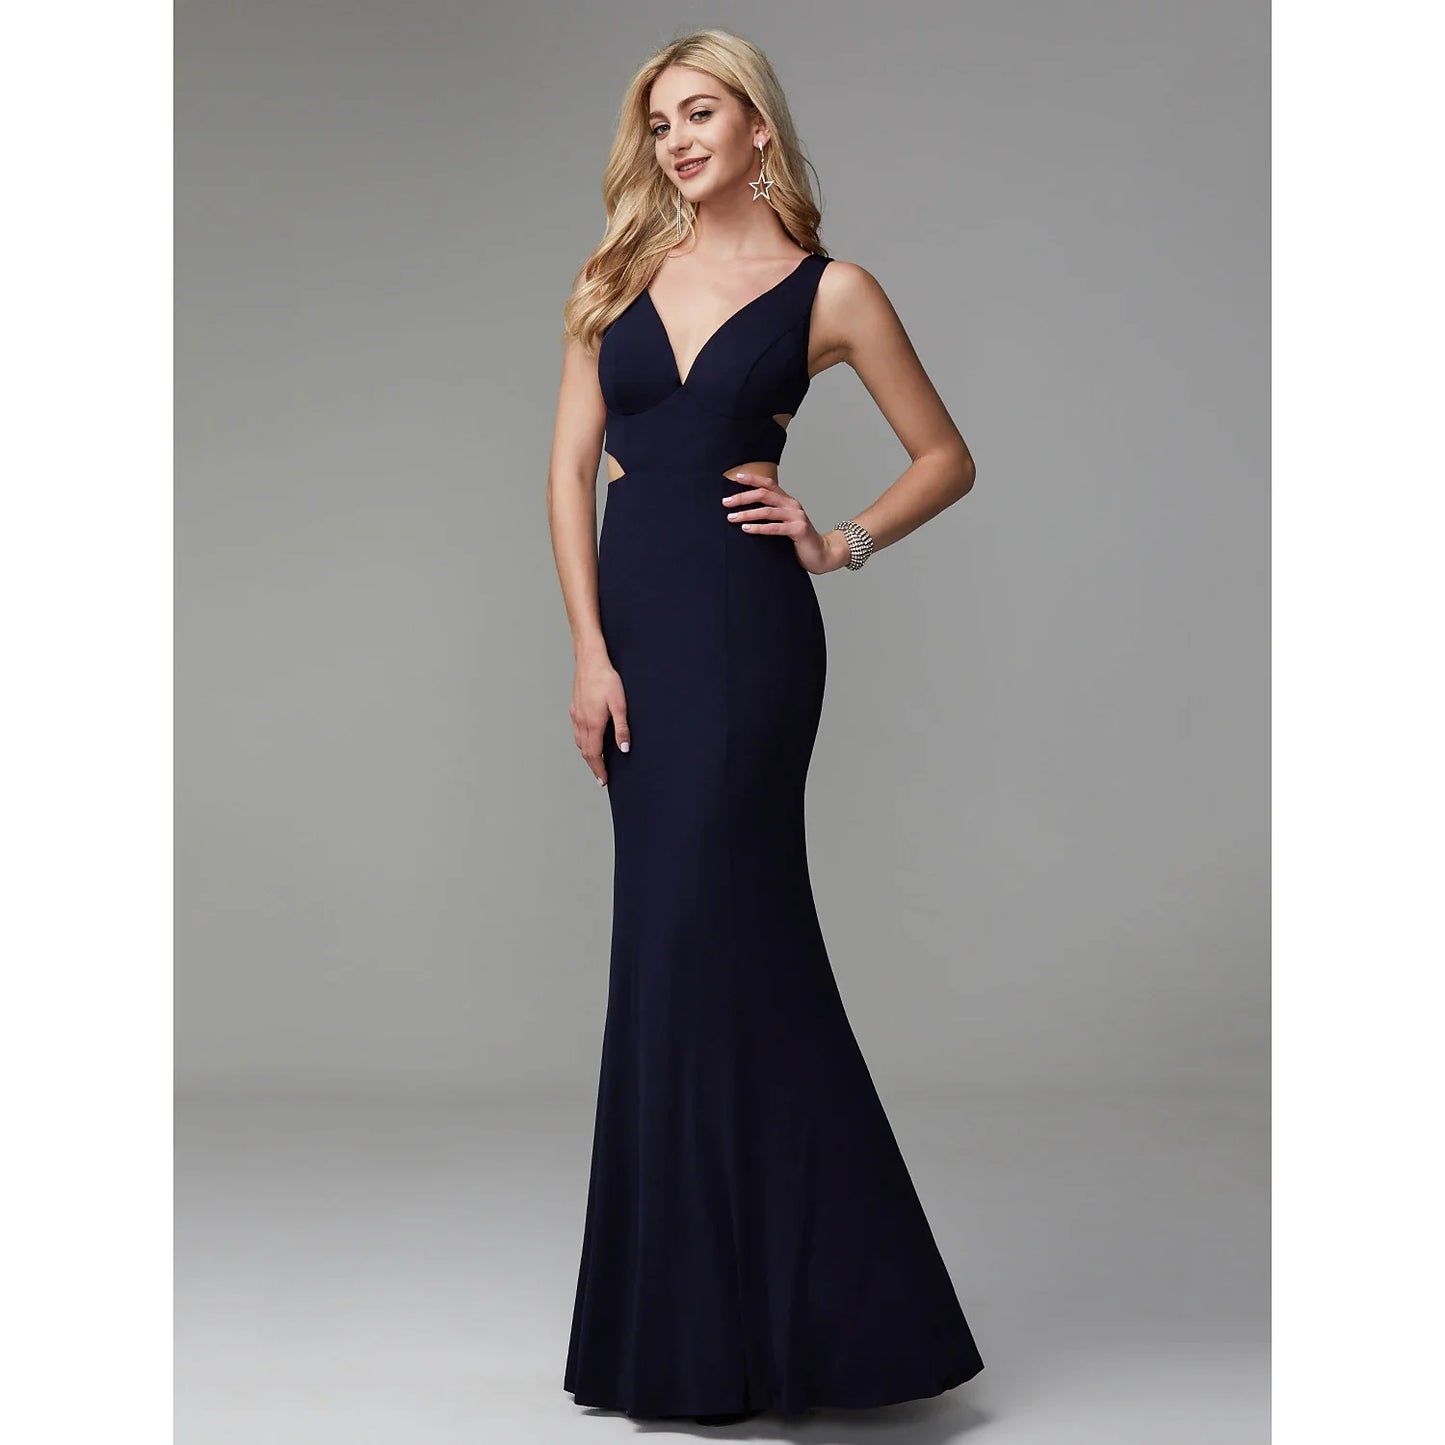 Mermaid / Trumpet Cut Out Beautiful Back Elegant Prom Formal Evening Dress V Neck Sleeveless Floor Length Spandex with Pleats